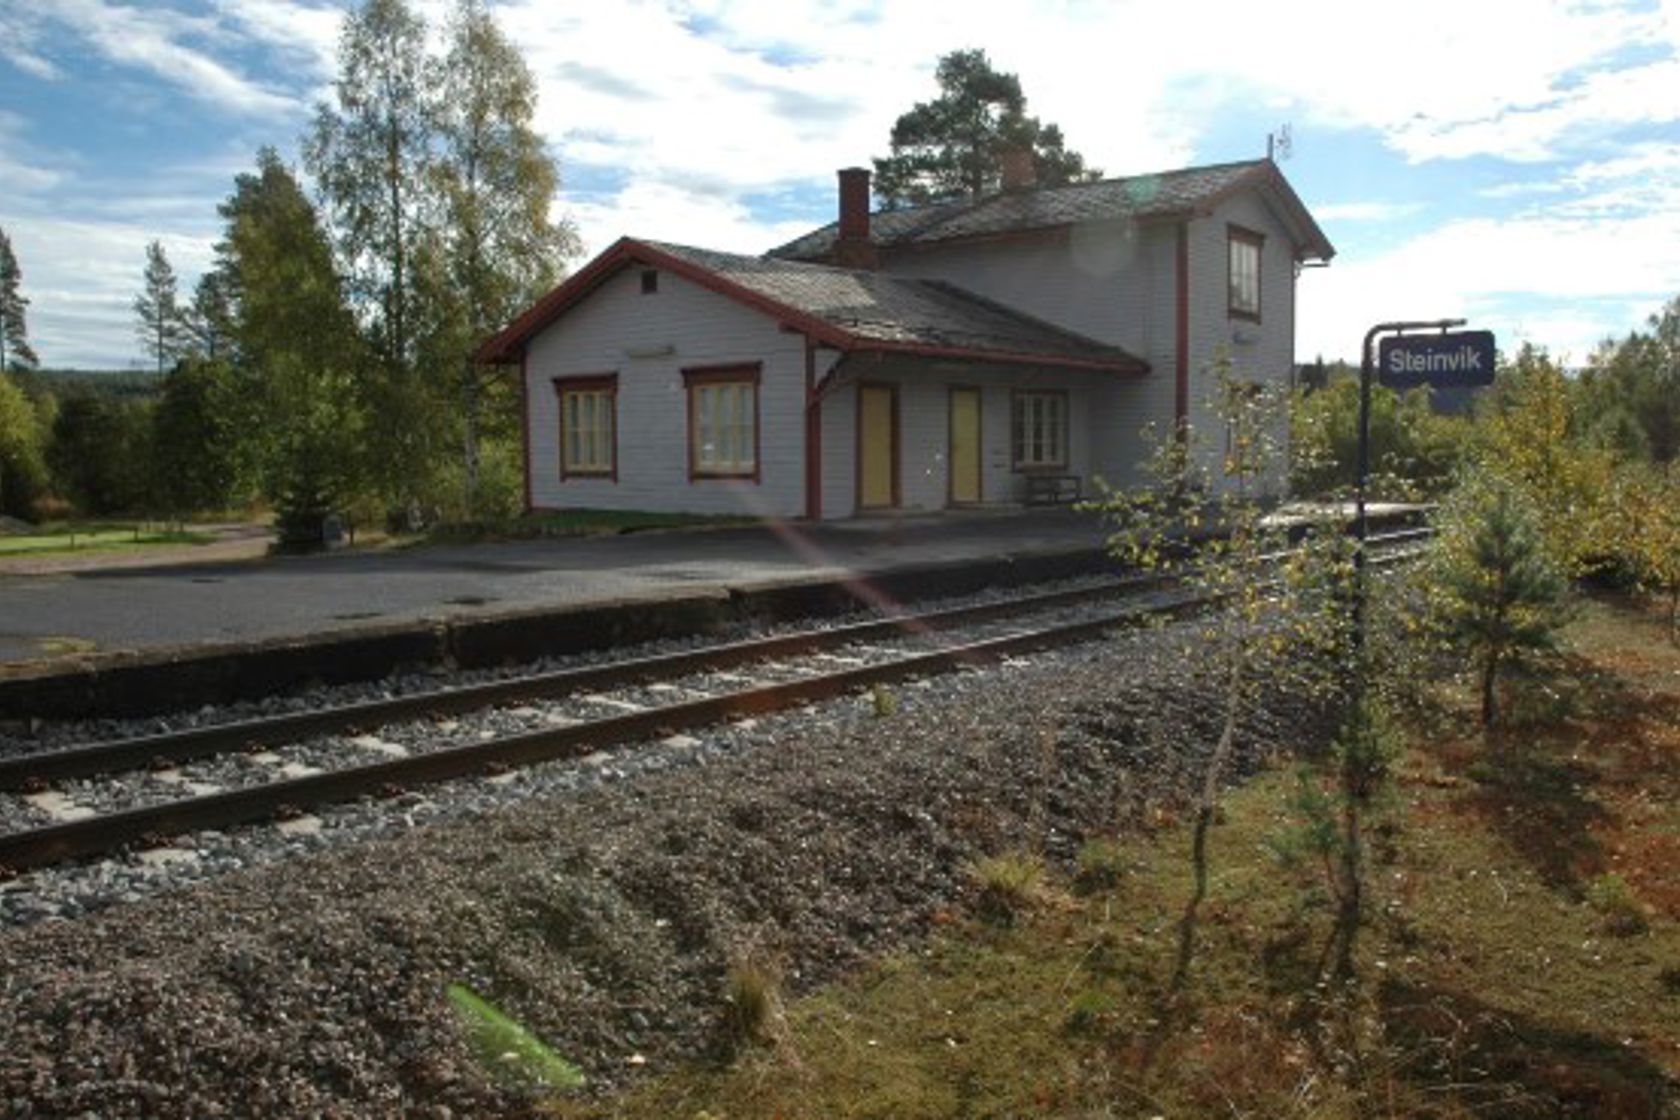 Exterior view of Steinvik station